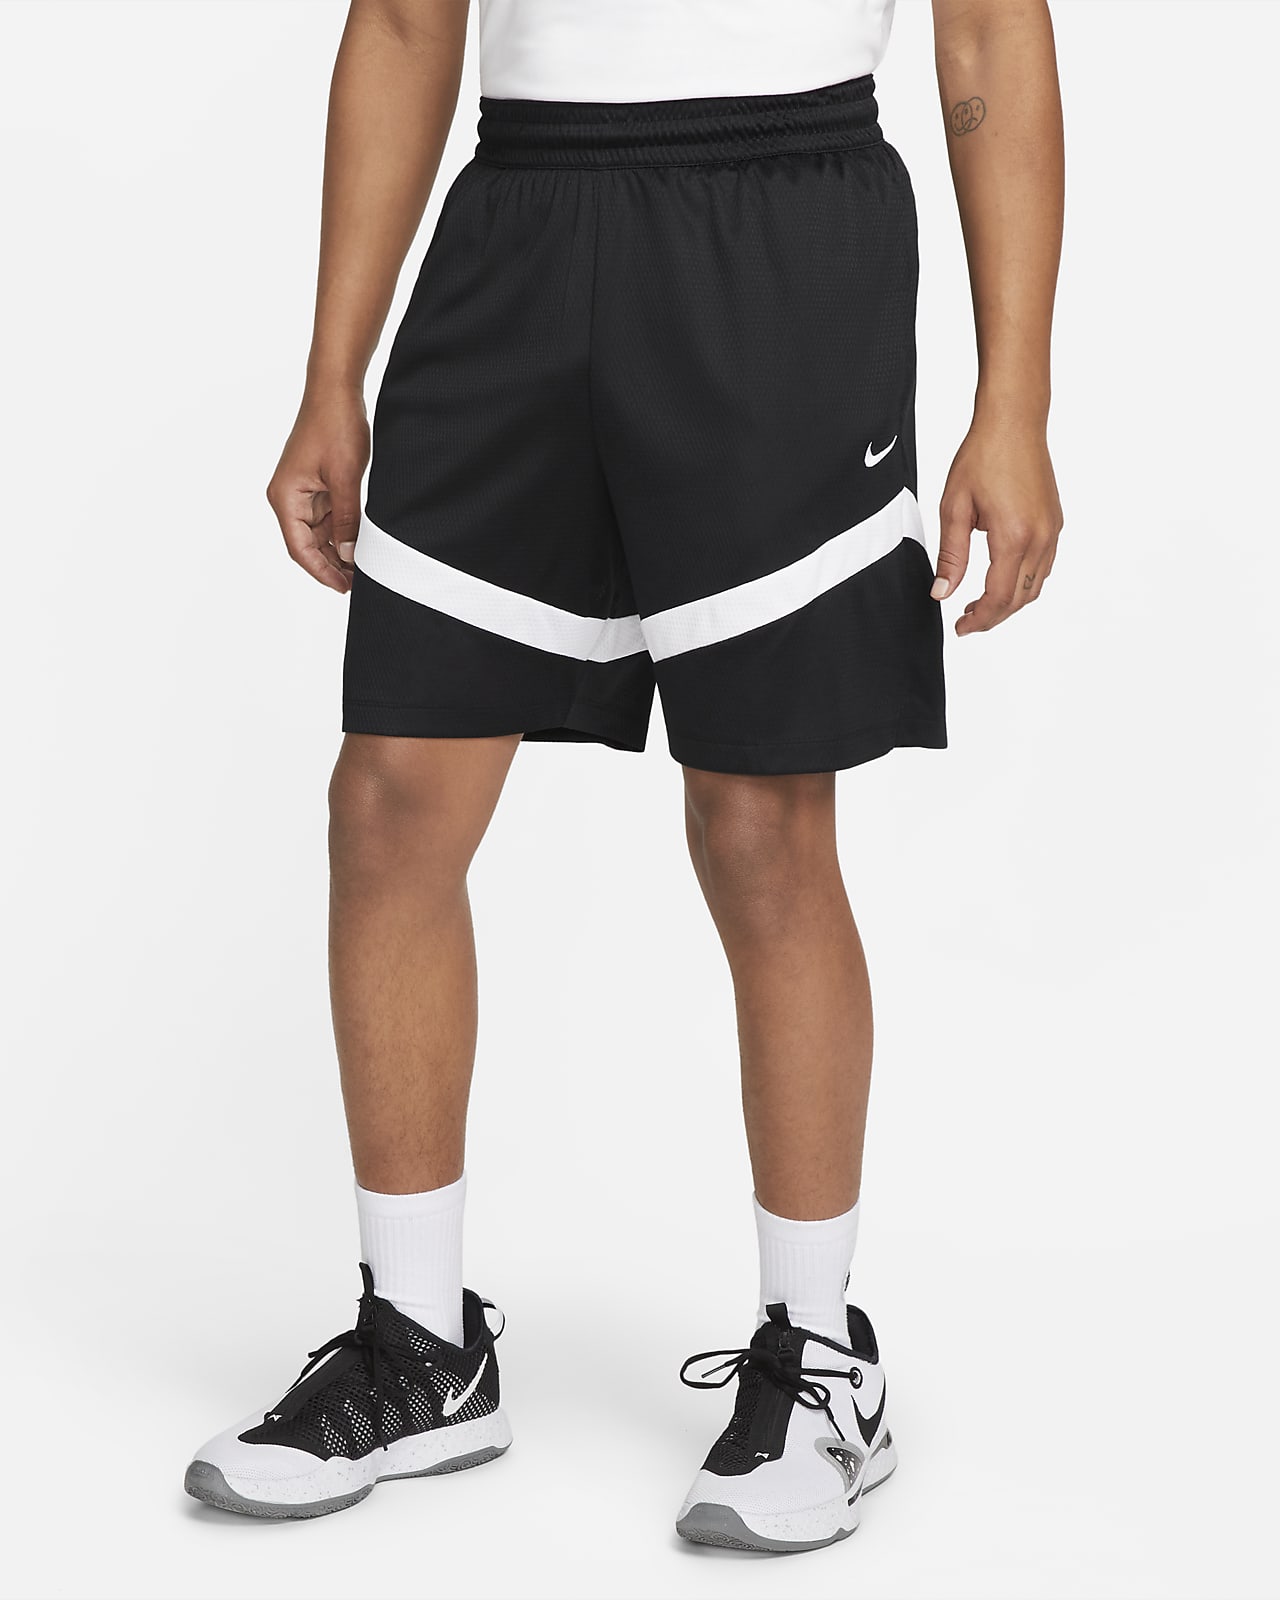 NIKE公式】ナイキ Dri-FIT アイコン メンズ 21cm バスケットボール